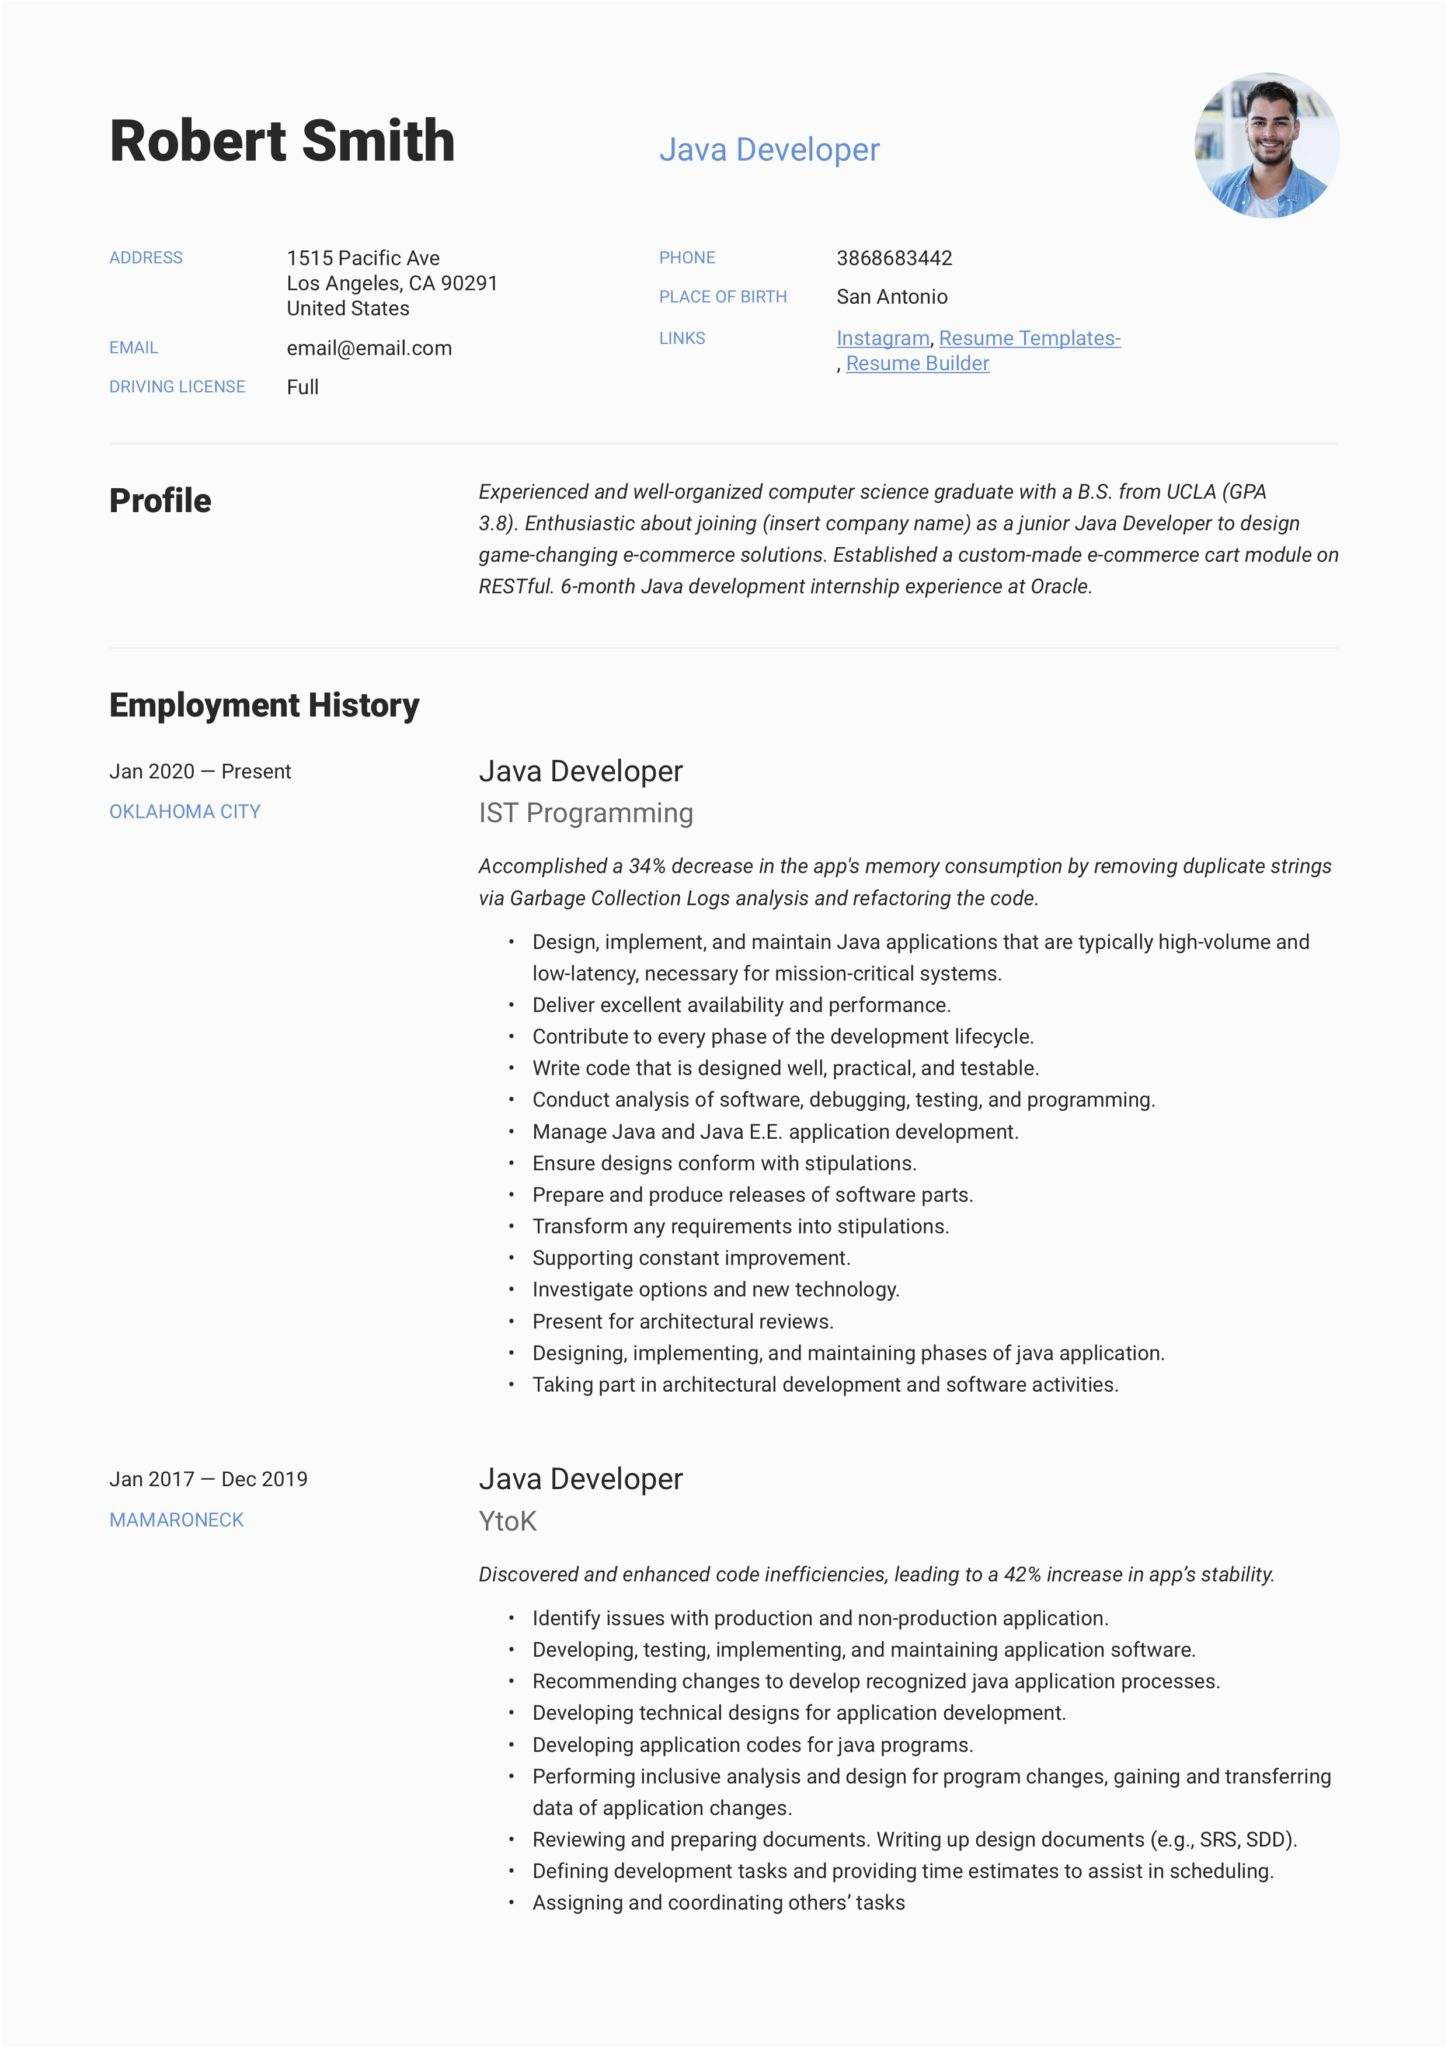 Java Sample Resume with soa Indeed Java Developer Resume & Writing Guide